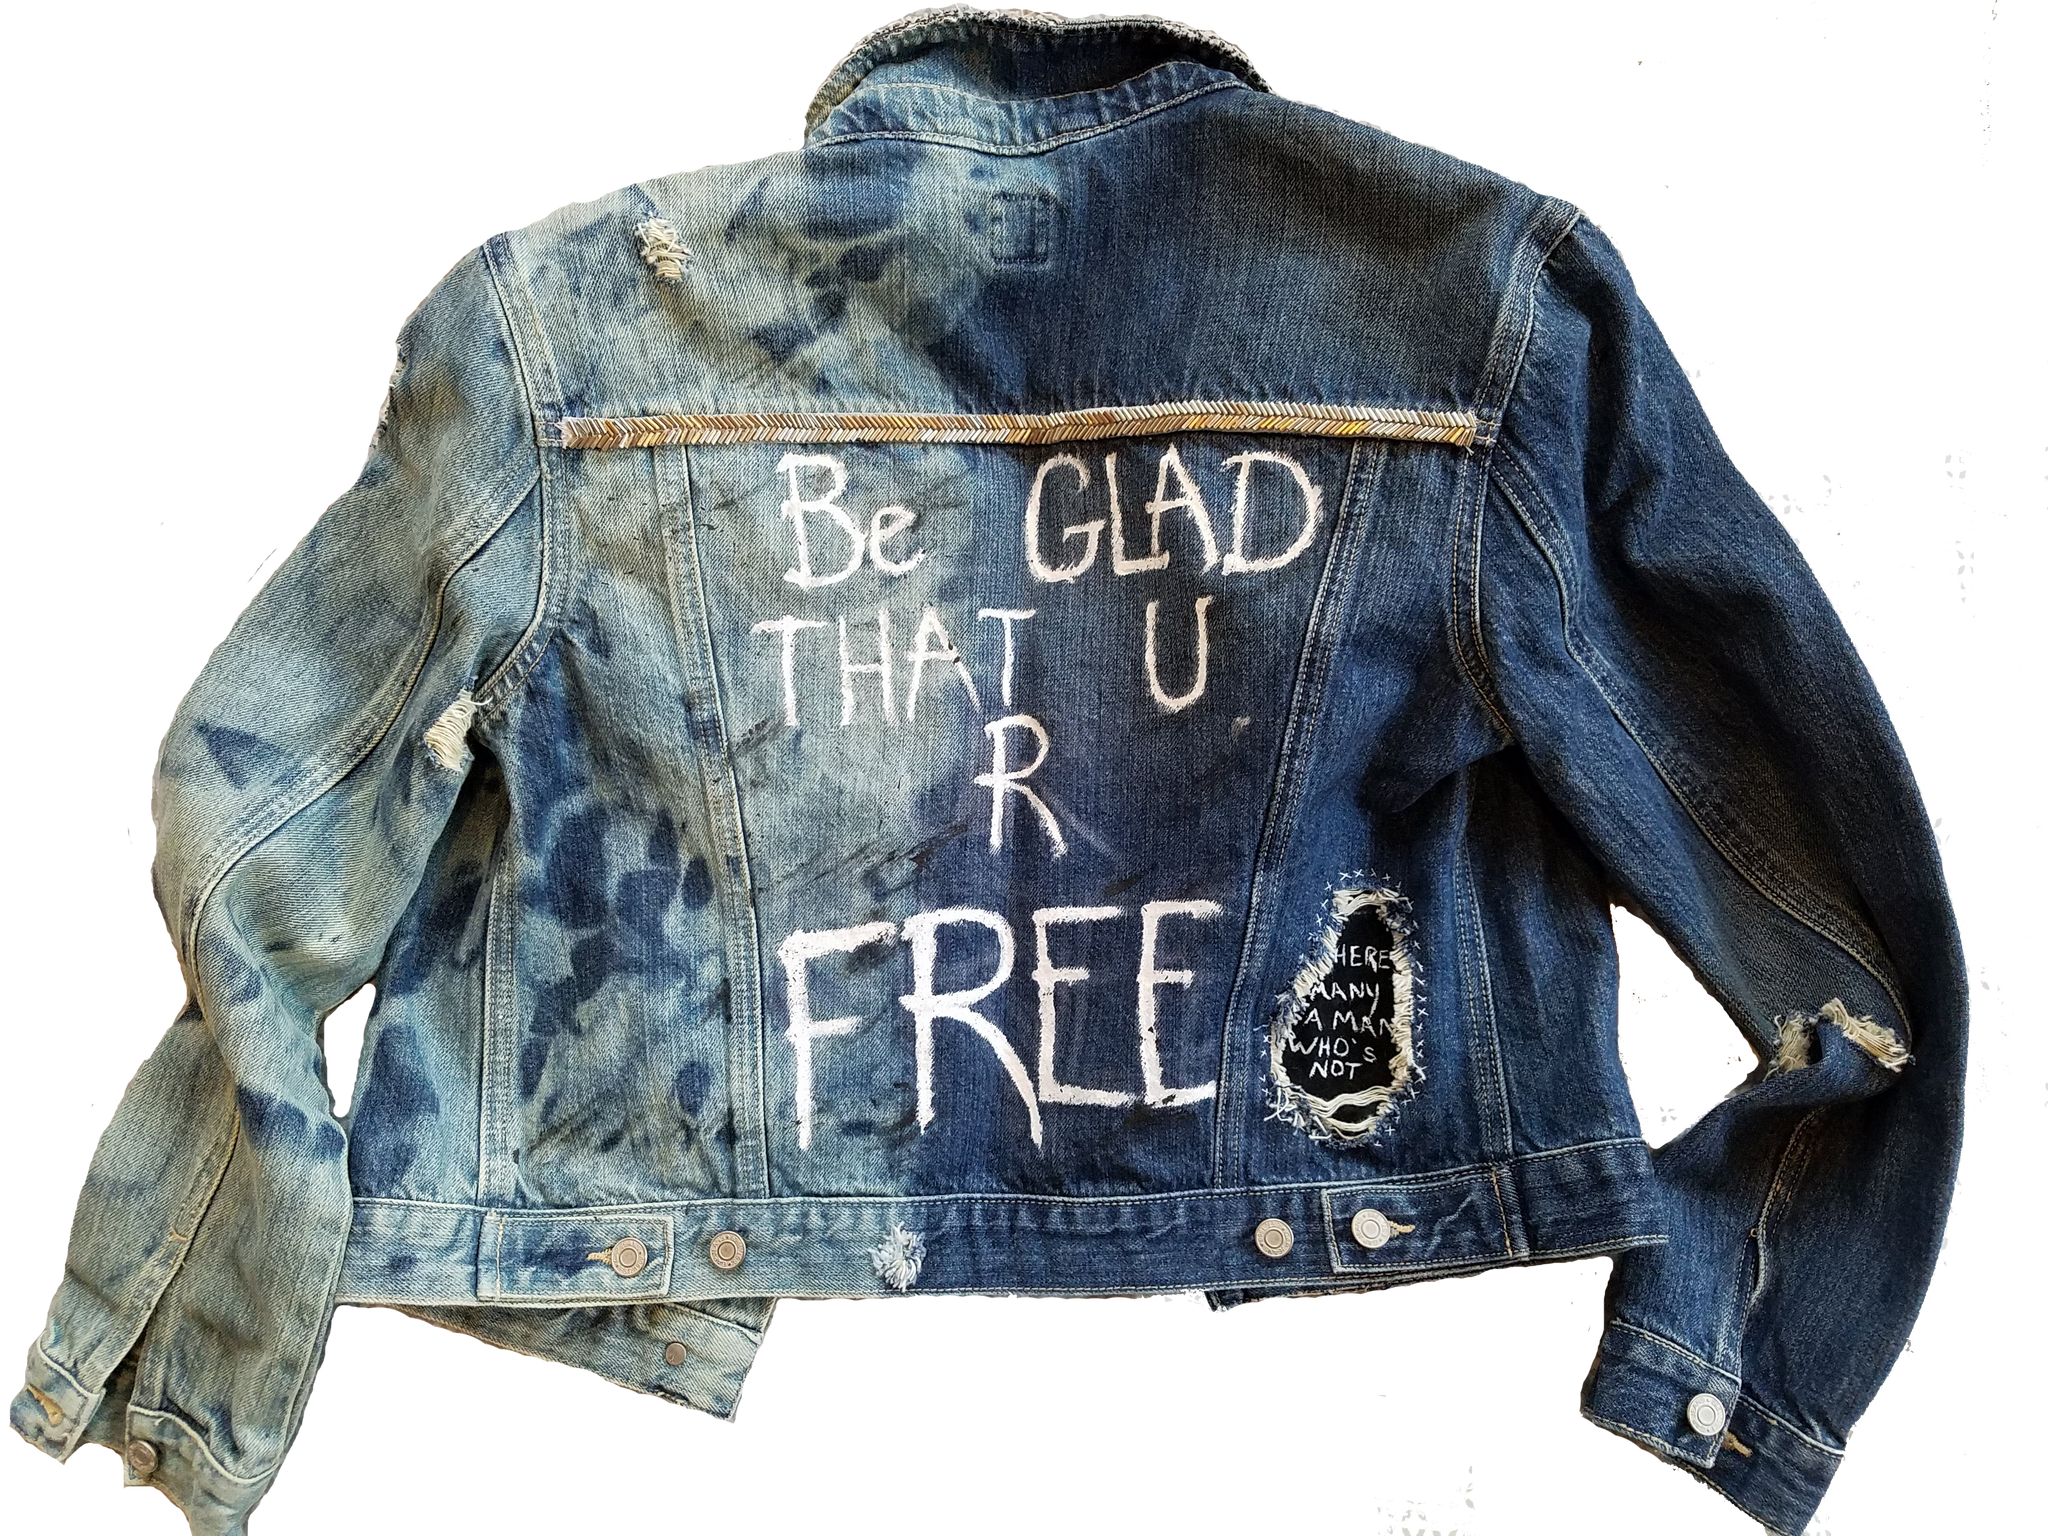 Prince Song Free Altered Denim Jacket